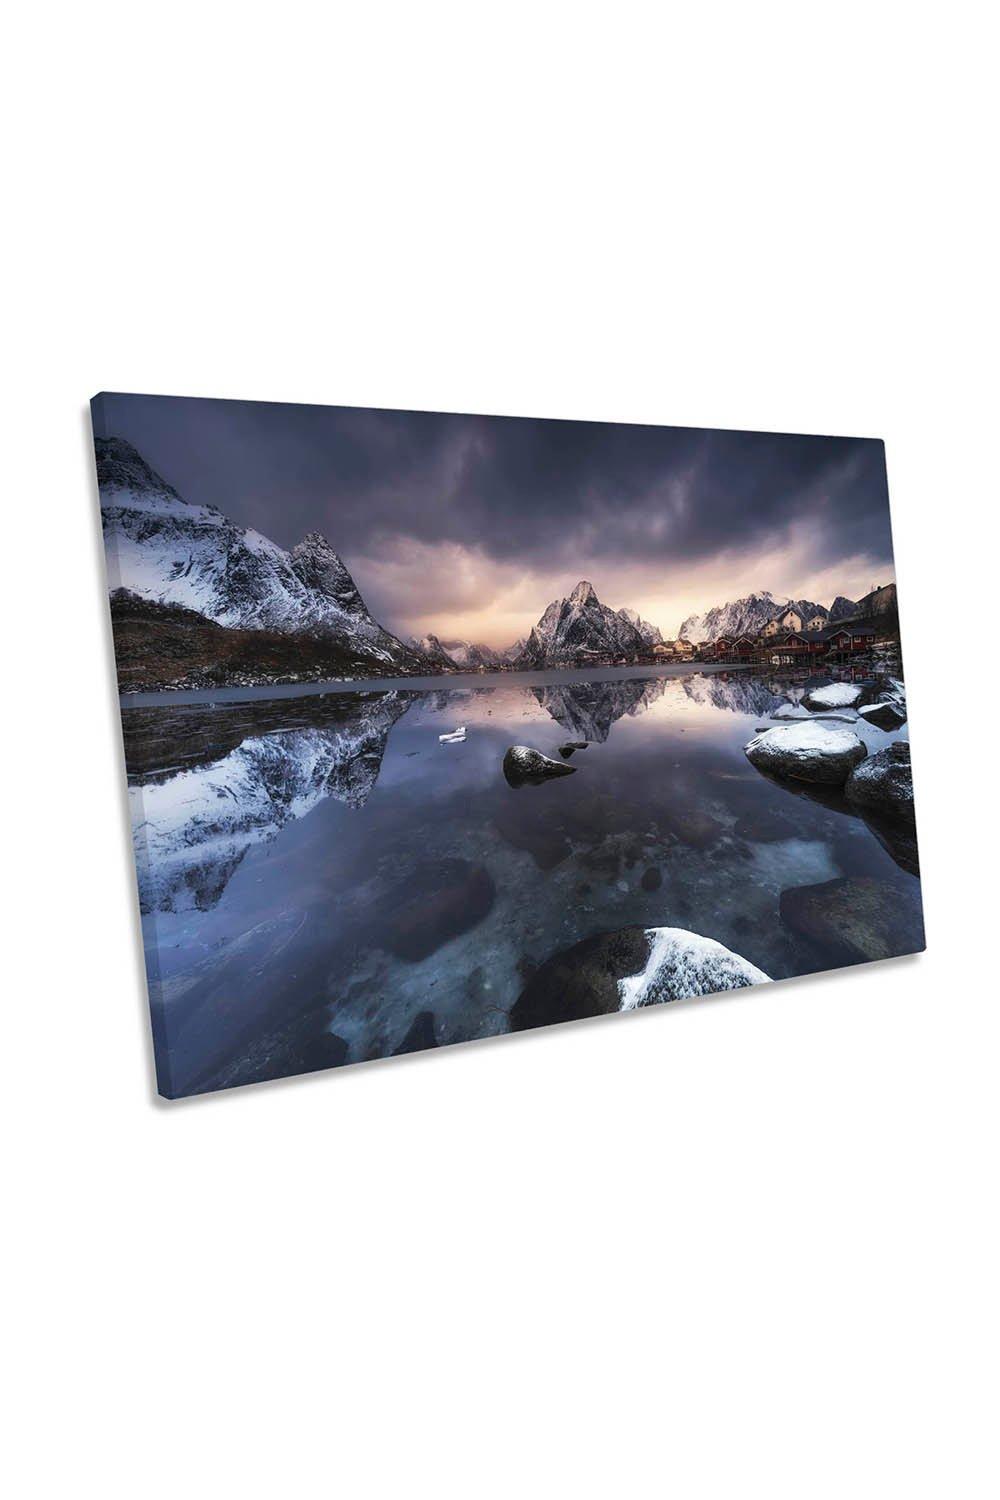 Winter Light Mountains Snow Landscape Canvas Wall Art Picture Print